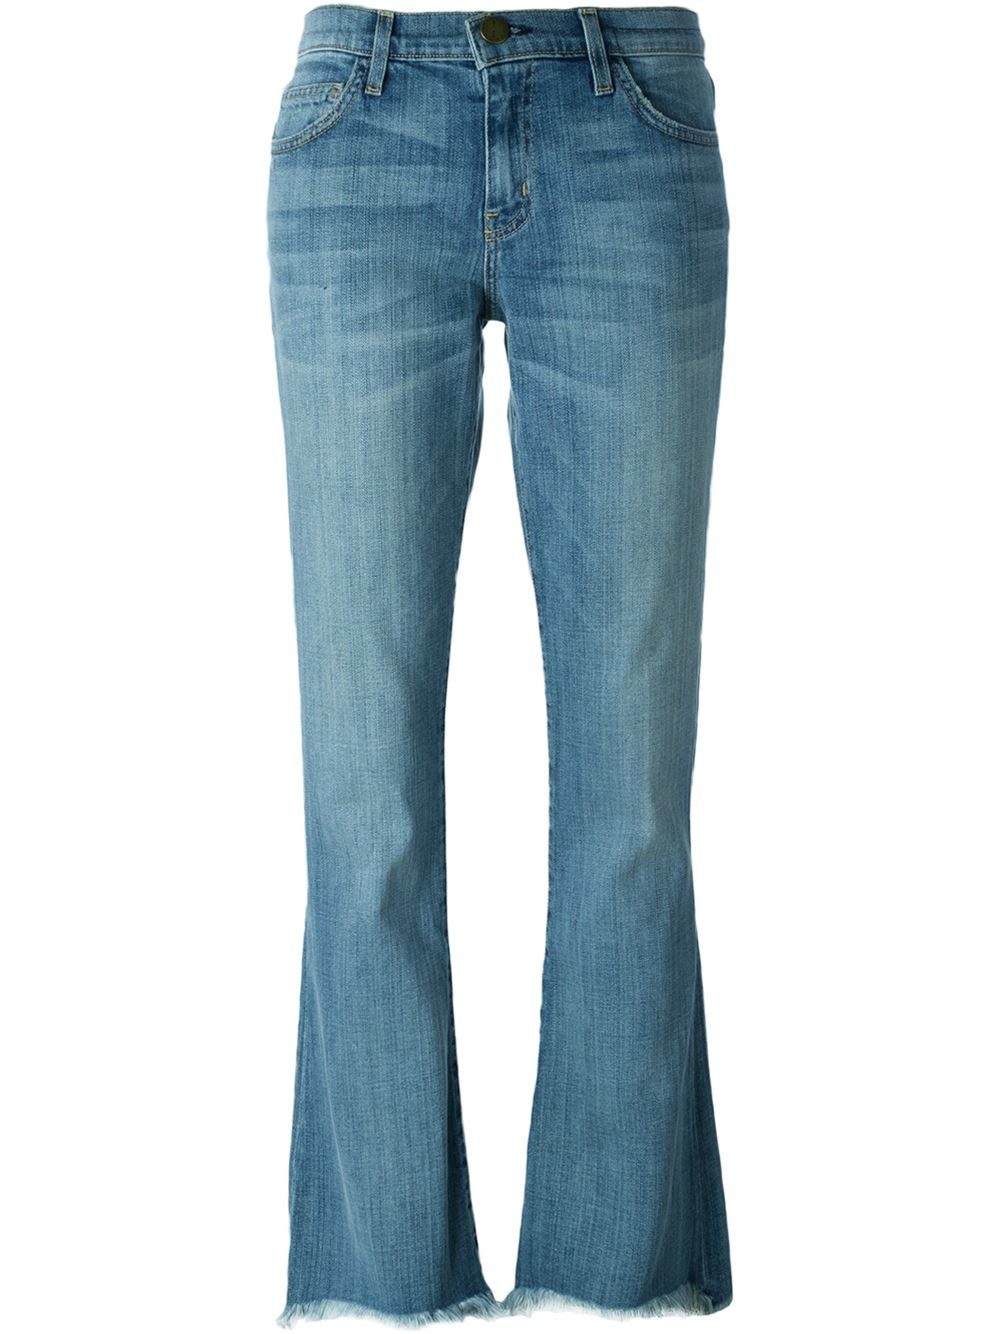 Current/elliott - 'superloved' Bootcut Jeans - Women - Cotton/polyester ...